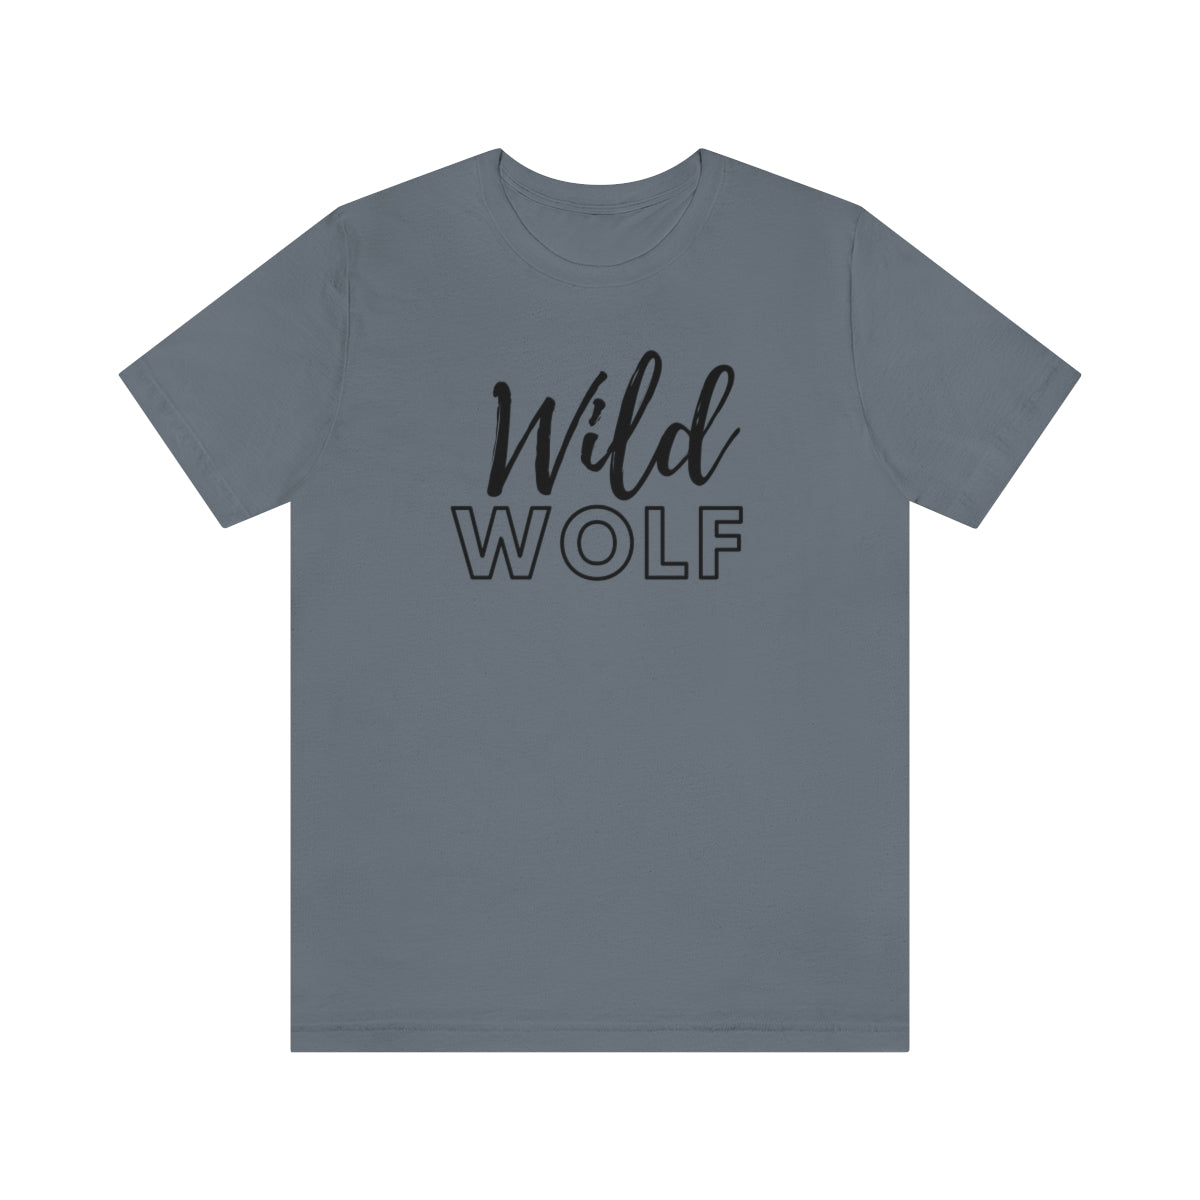 Wild Wolf Tee, Short Sleeve T-Shirt, Animal T-Shirt,